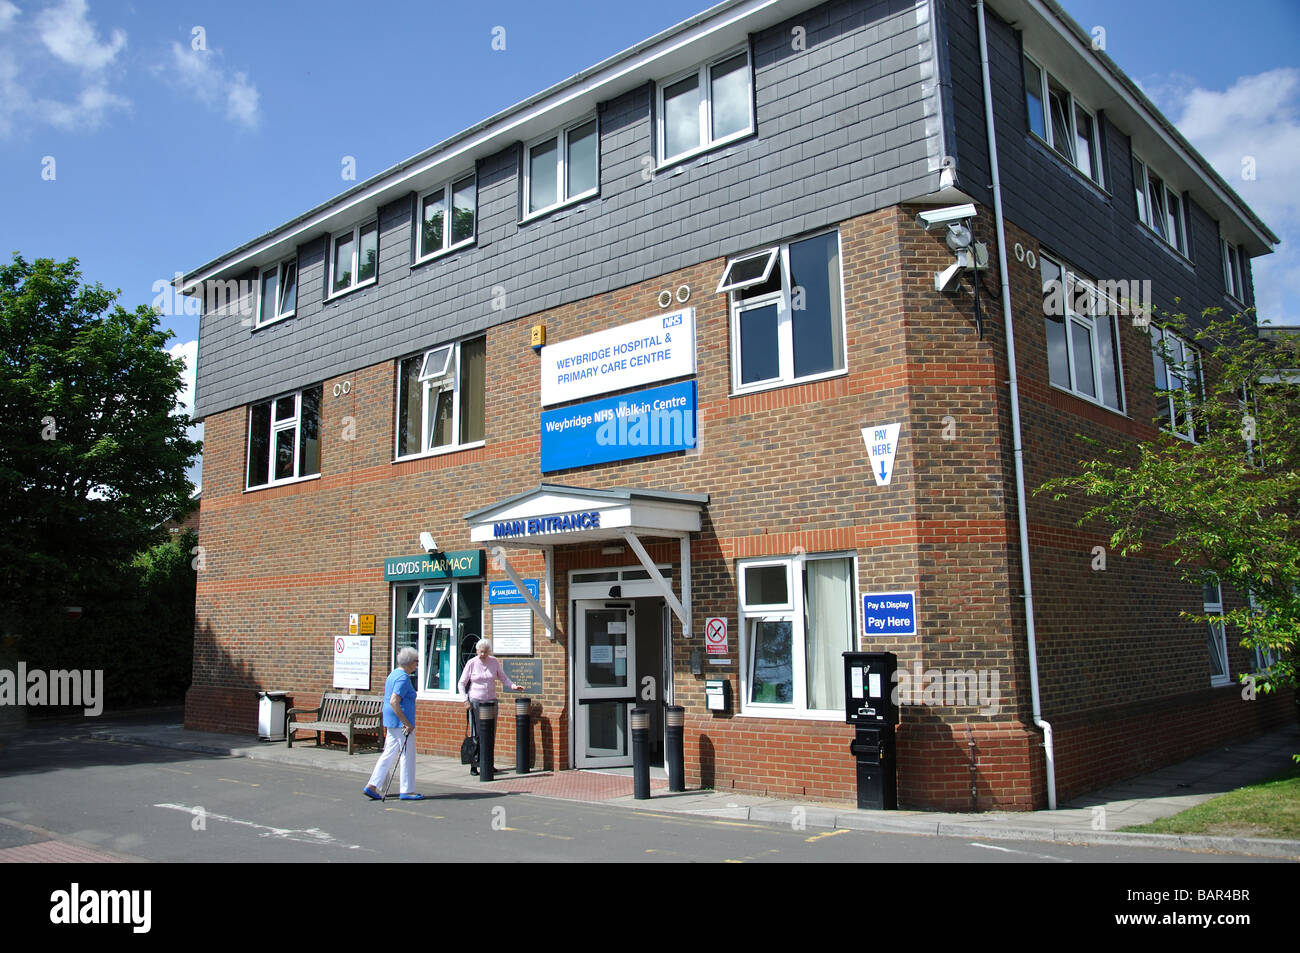 L'hôpital de Weybridge & Primary Health Care NHS Walk-In Centre, Weybridge, Surrey, Angleterre, Royaume-Uni Banque D'Images